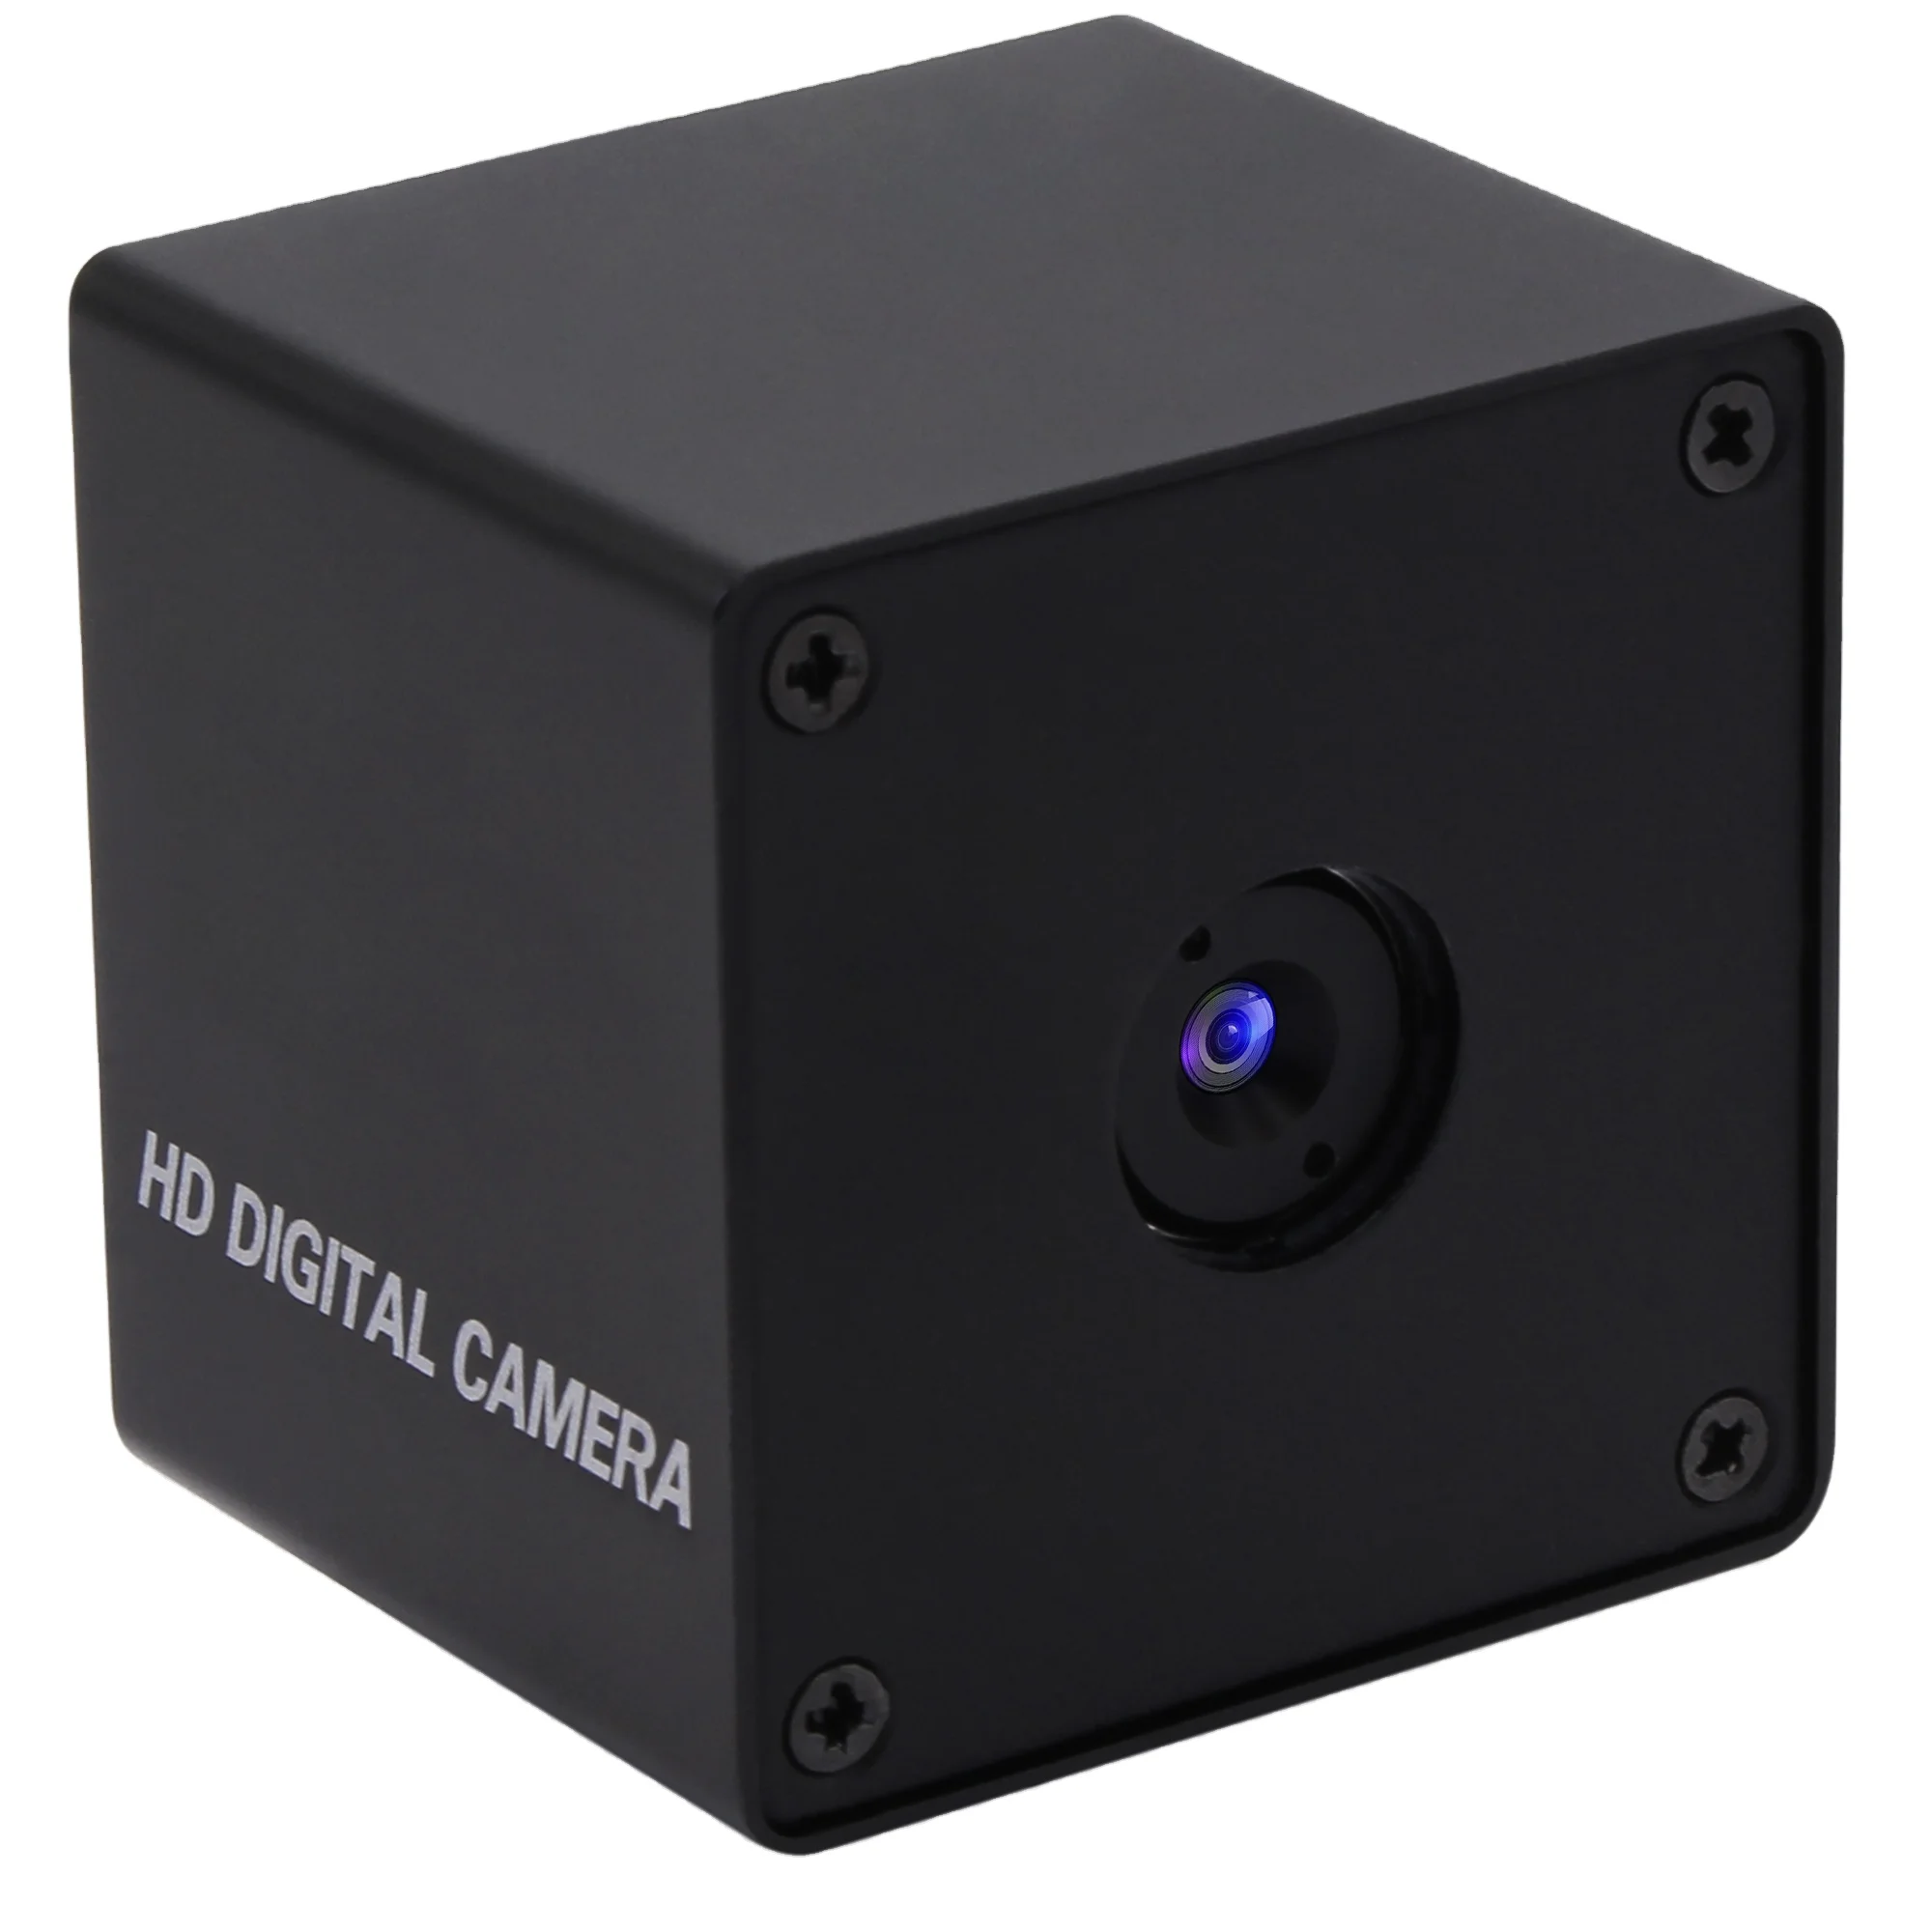 Видеокамера ELP 5MP OV5640 CMOS Plug-n-play HD USB с автофокусом и 60-градусным объективом, мини-USB-веб-камера с металлическим корпусом